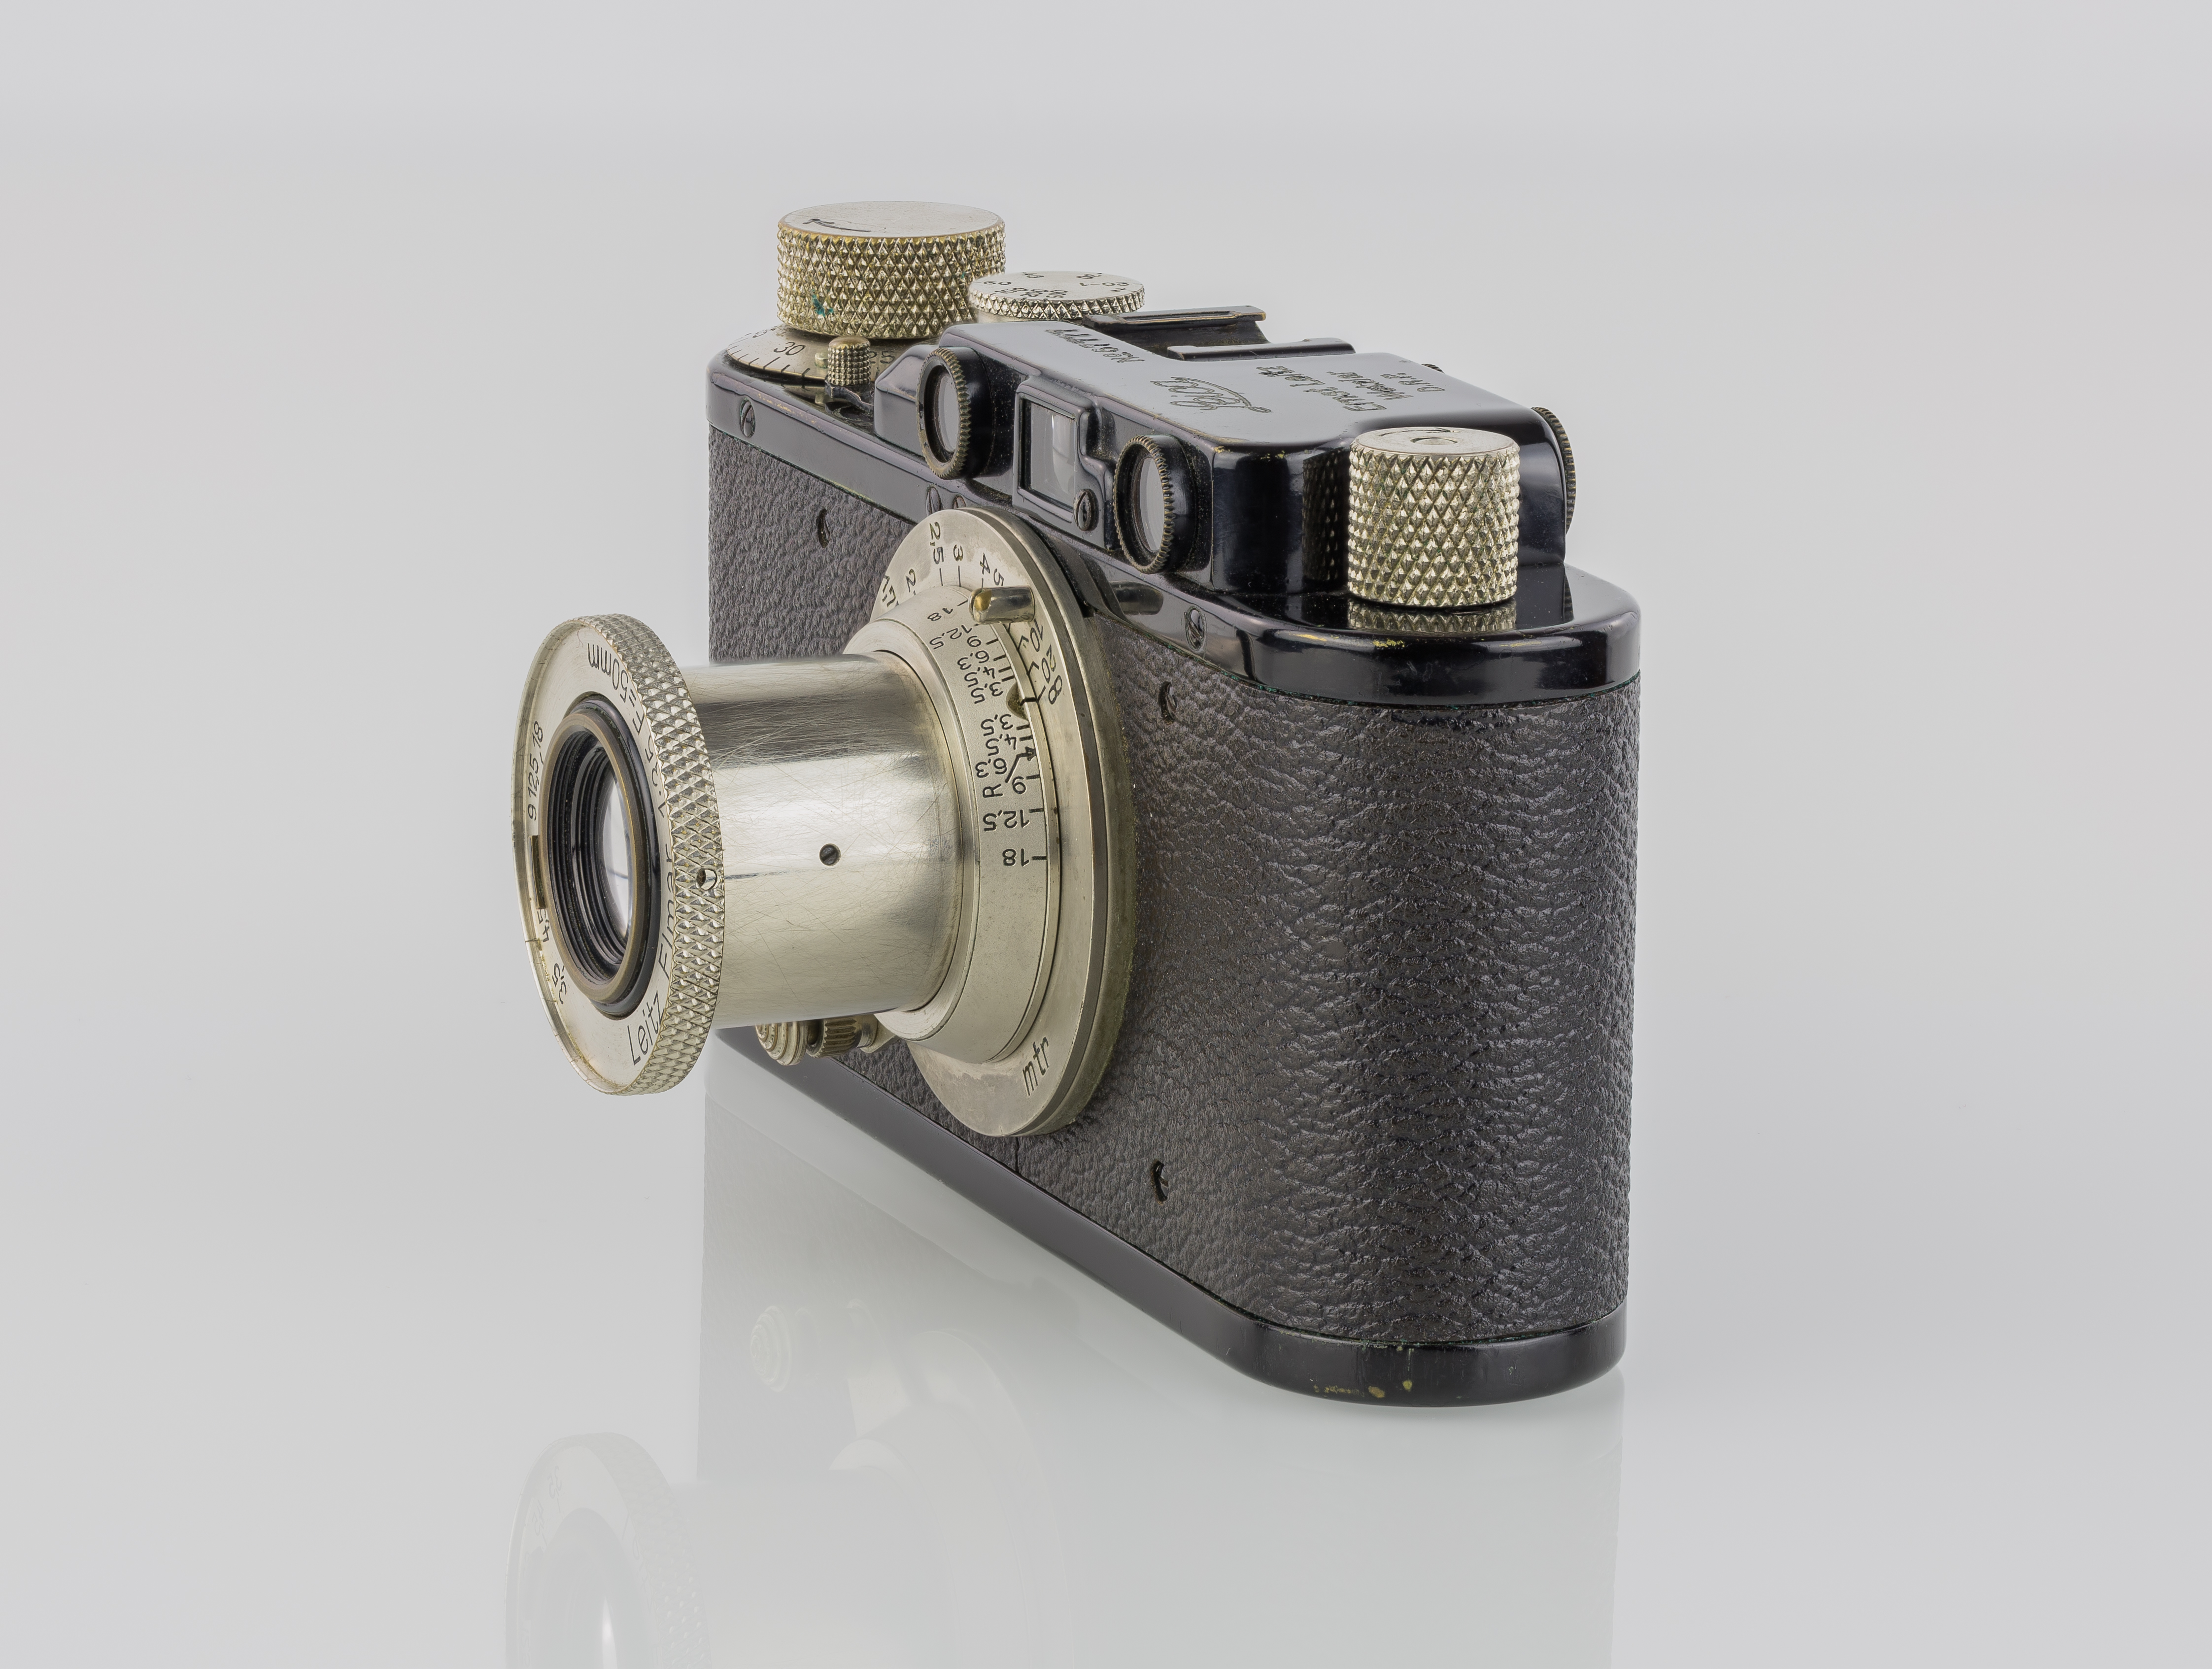 LEI0150 198 Leica II schwarz - Sn. 67777 1931-M39 side view Umbau von Ic-0 extricated lens